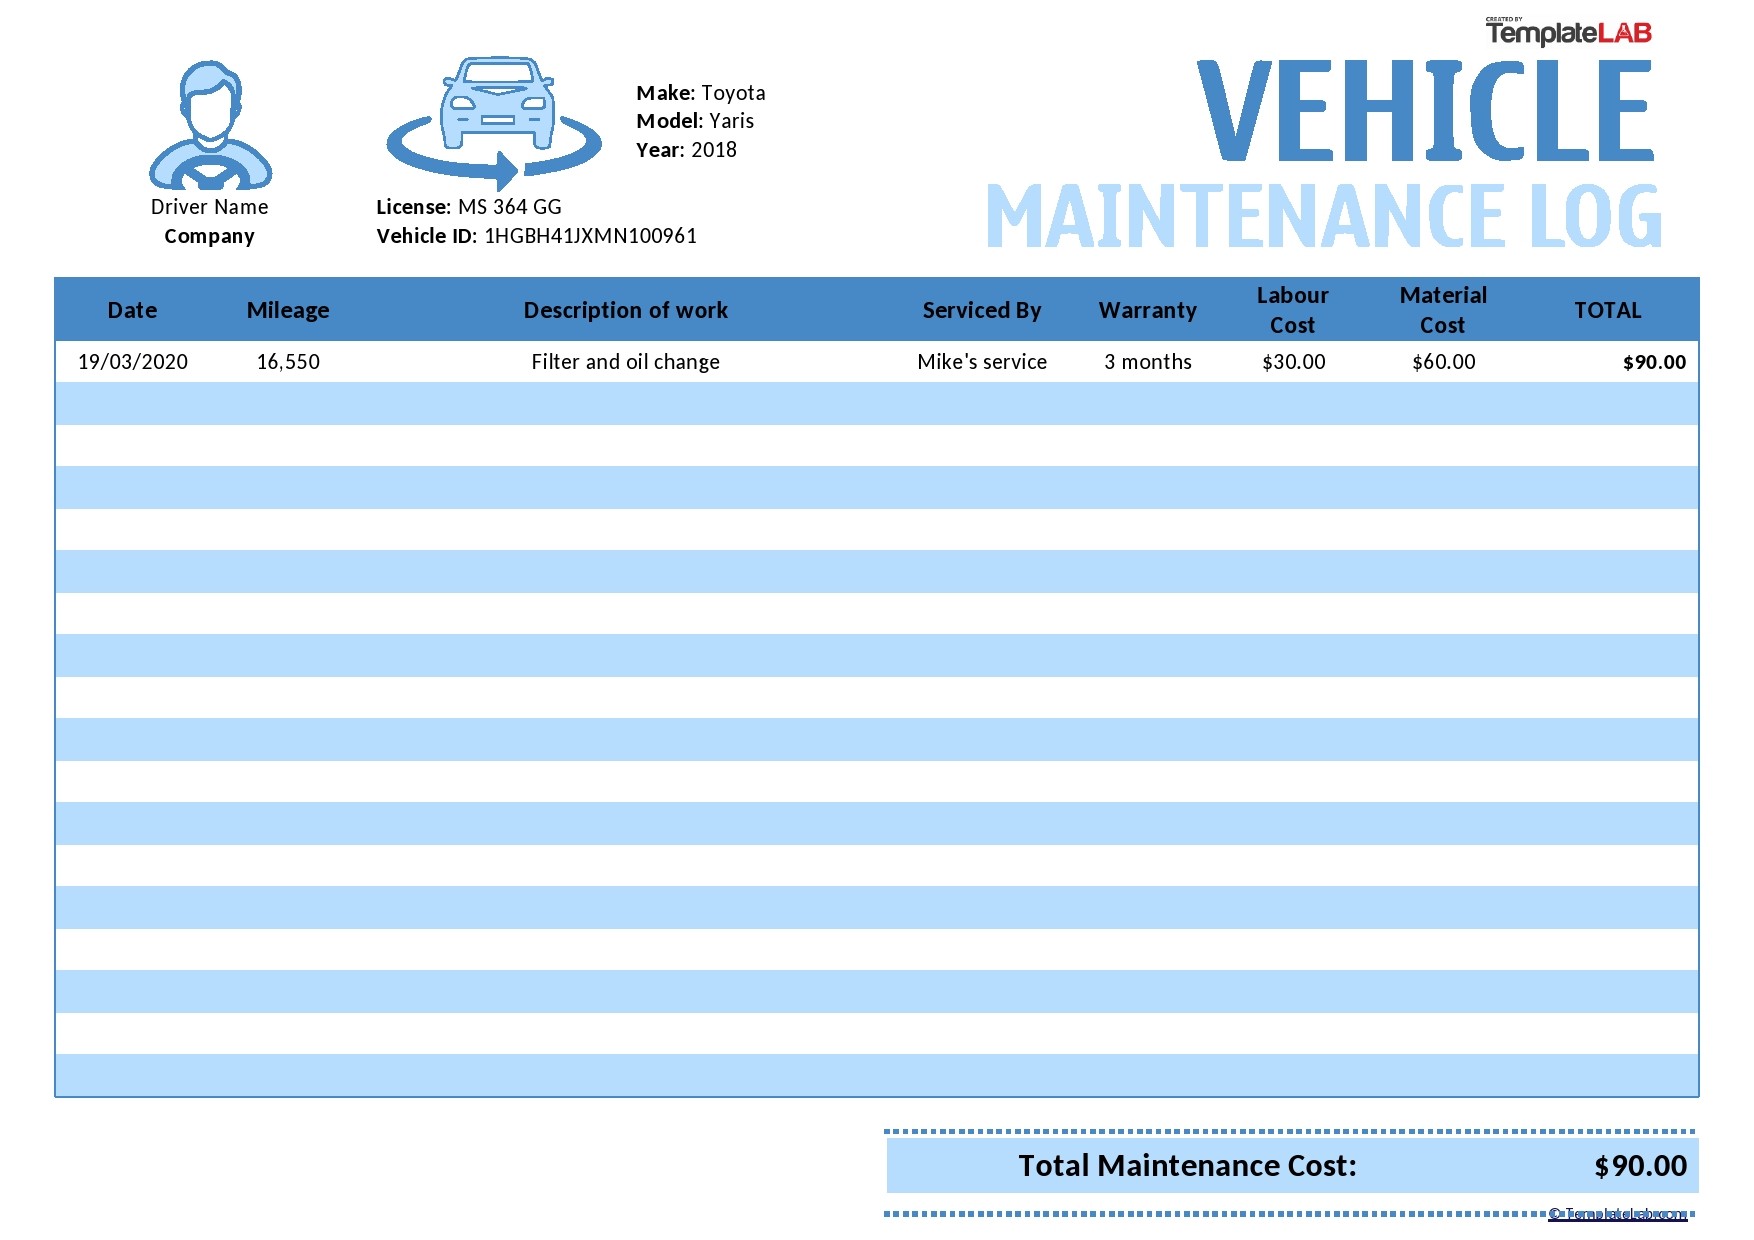 Free Vehicle Maintenance Log - TemplateLab.com